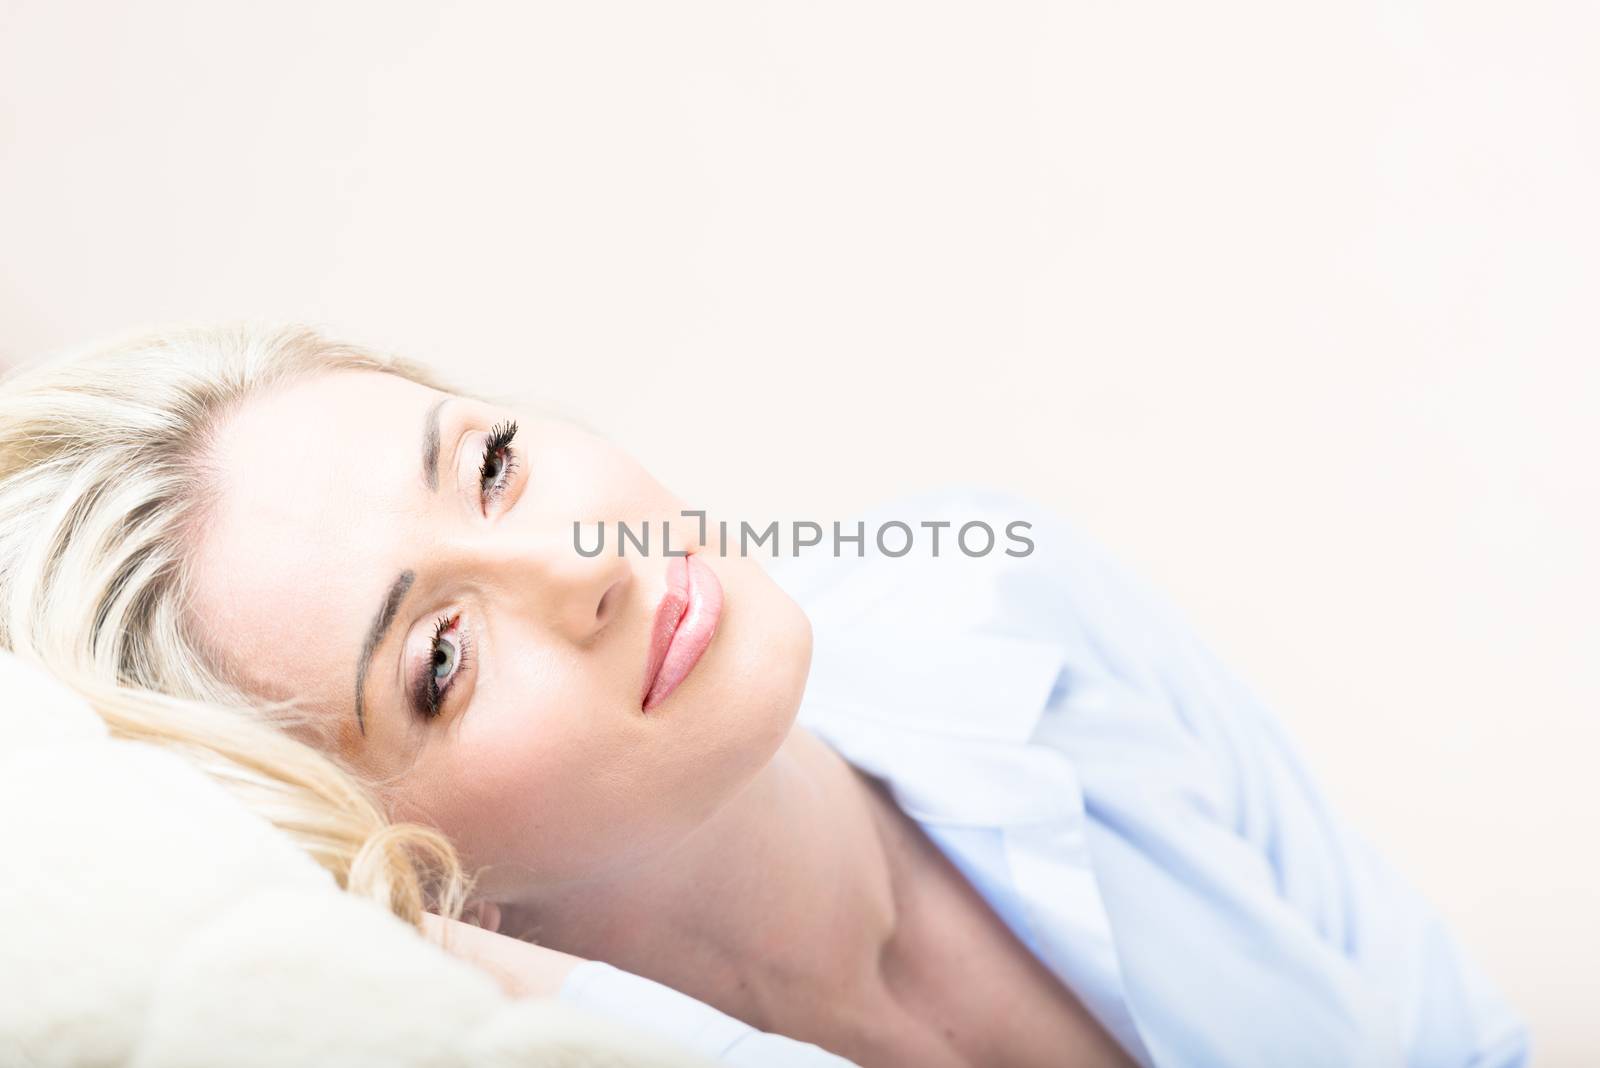 Portrait of sexy hot smiling blond by Nanisimova